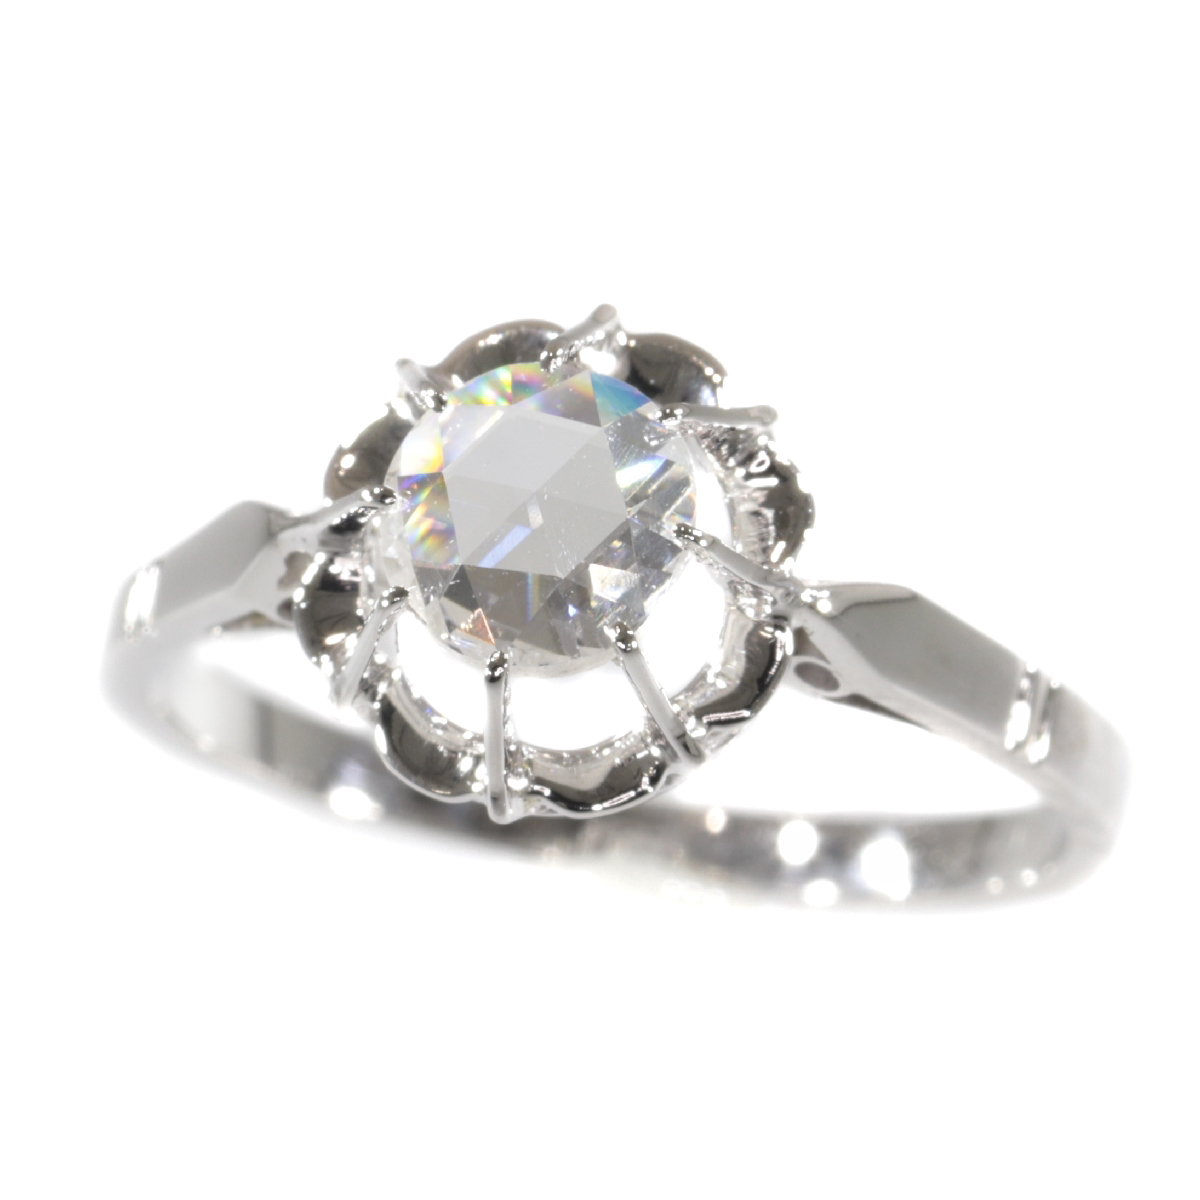 Vintage Art Deco large rose cut diamond engagement ring